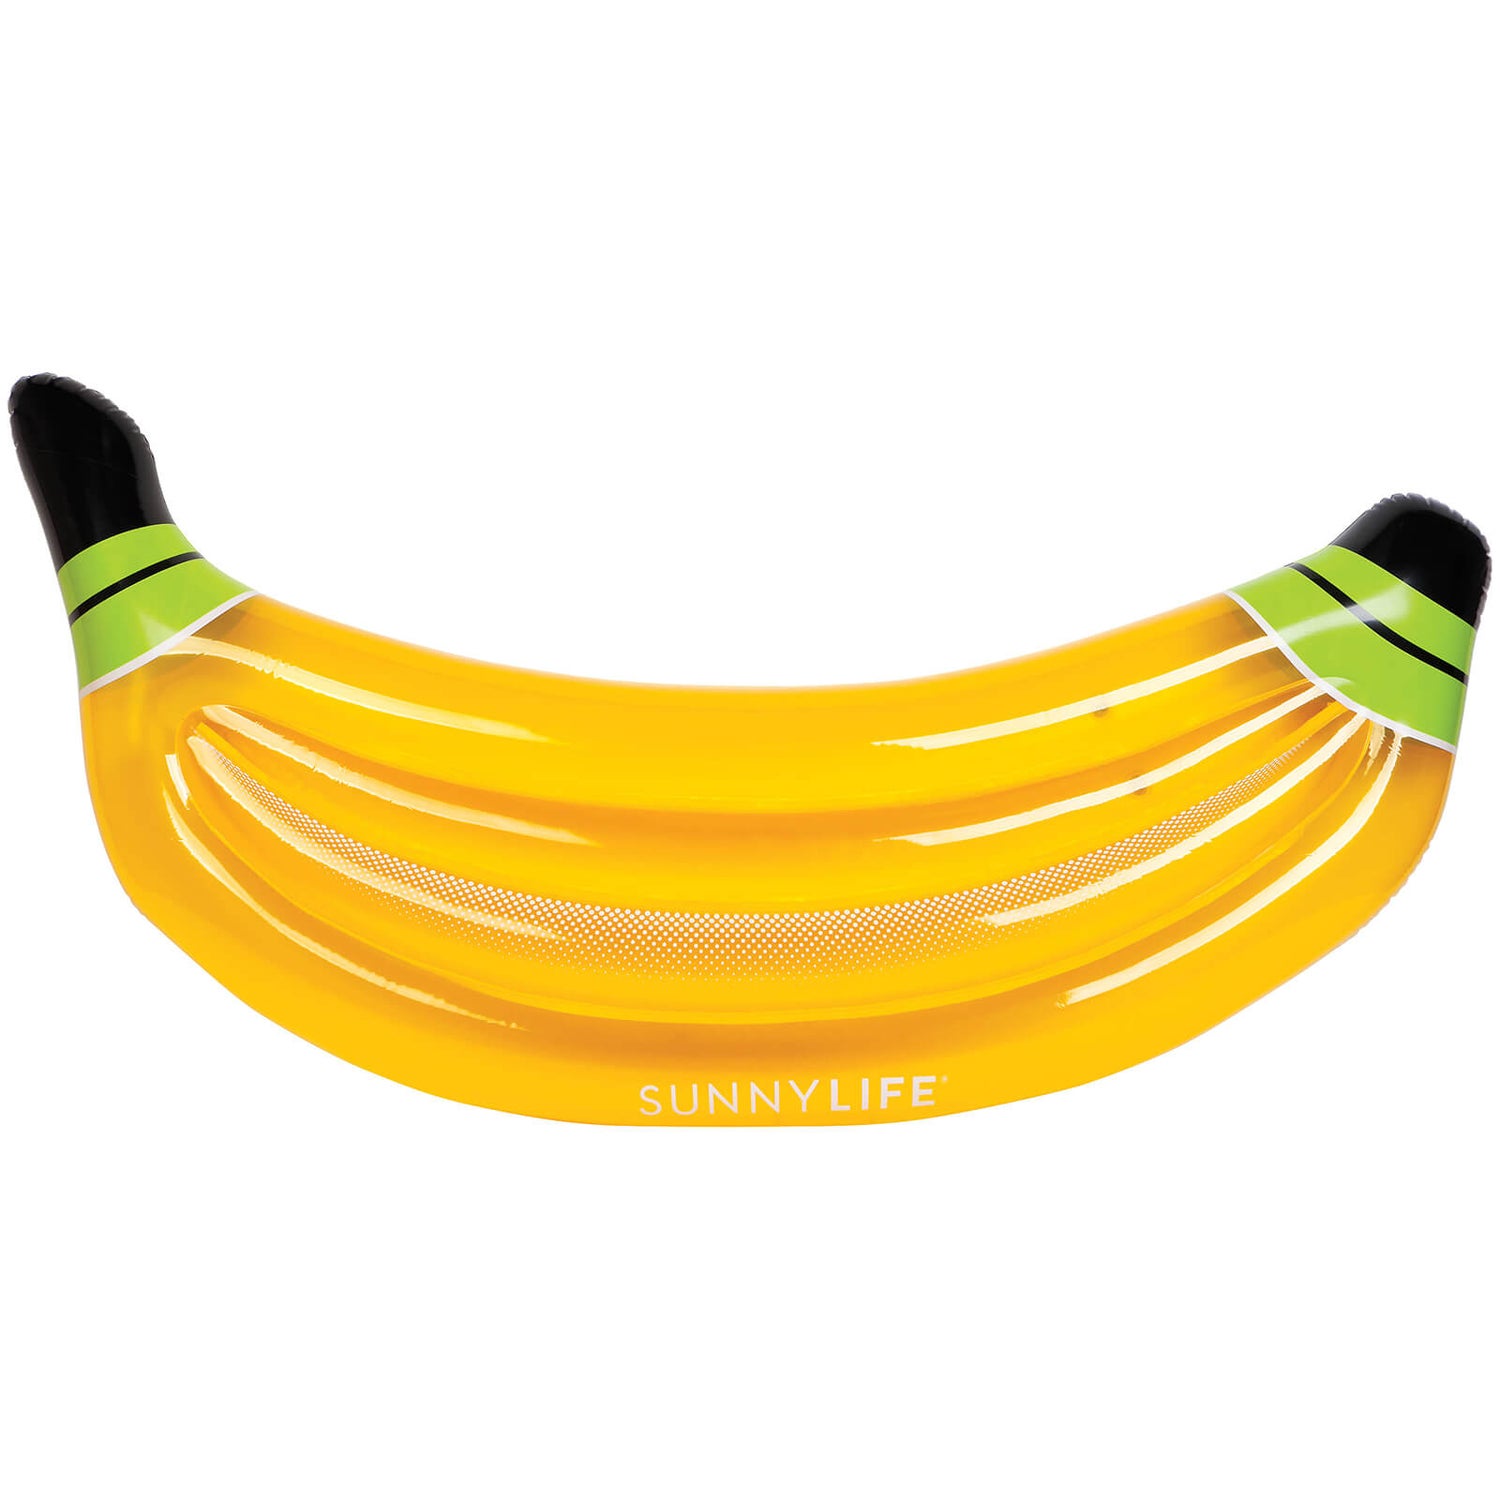 Sunnylife Luxe Lie-On Banana Float